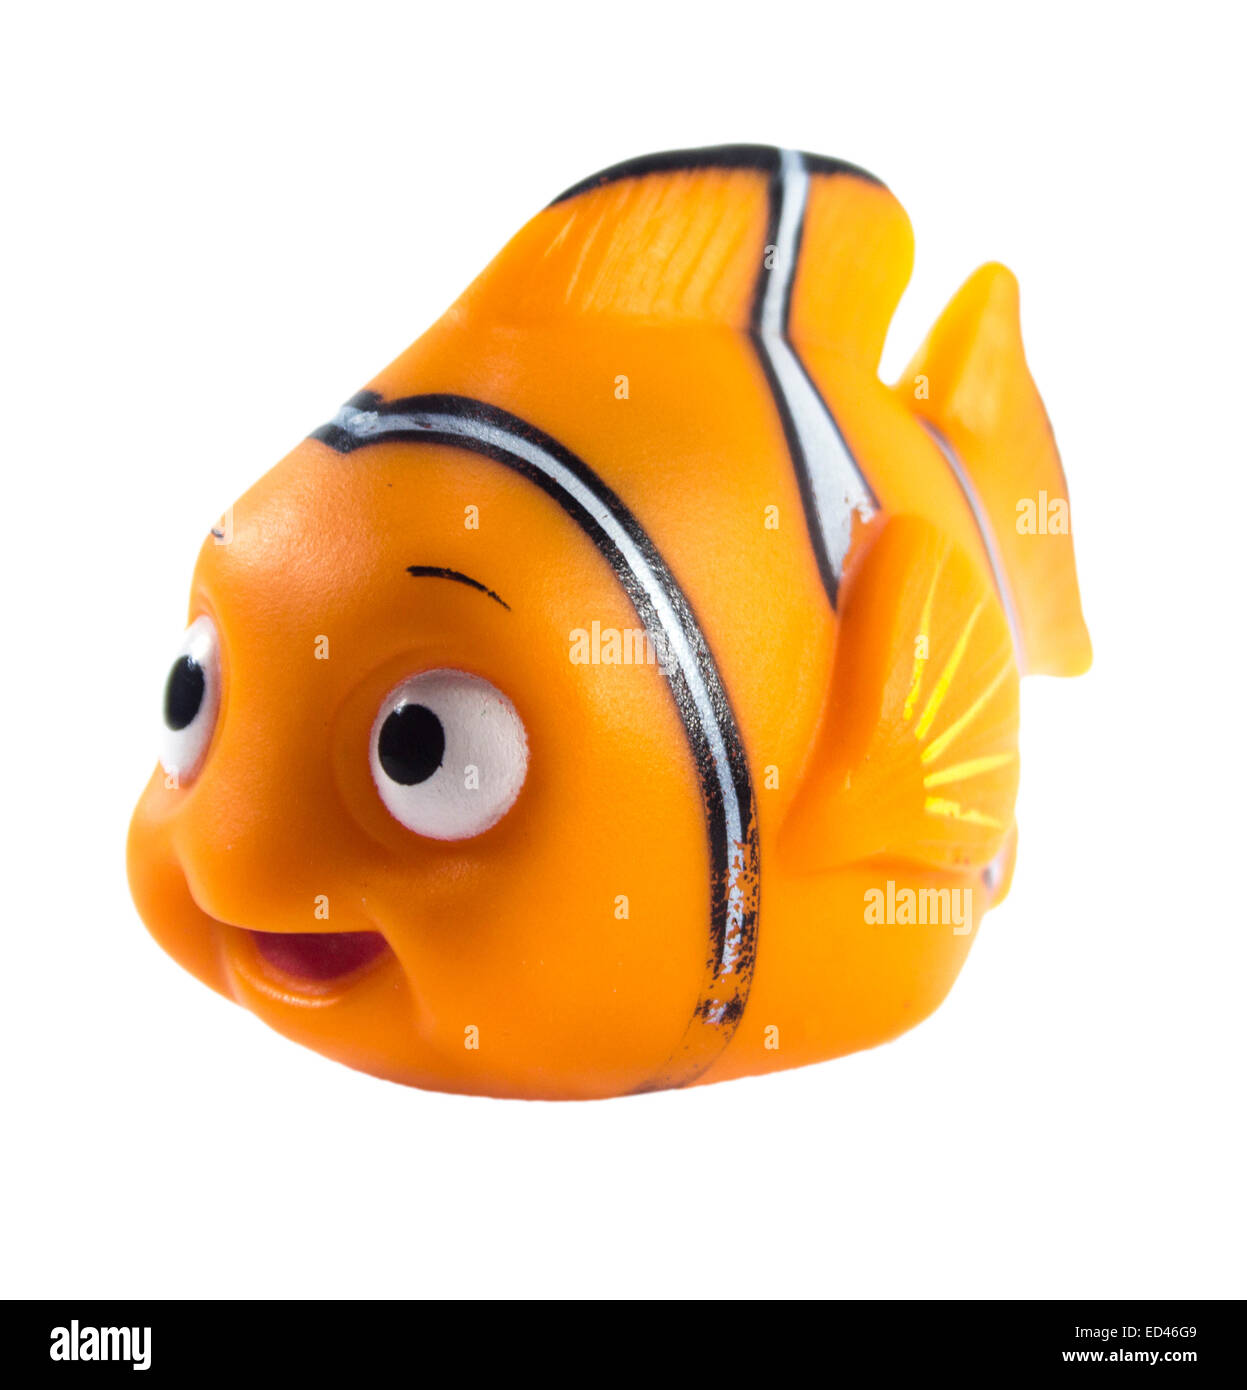 Amman, Jordan - November  1, 2014: Marlin cartoon fish toy character of Finding Nemo movie from Disney Pixar animation studio. Stock Photo